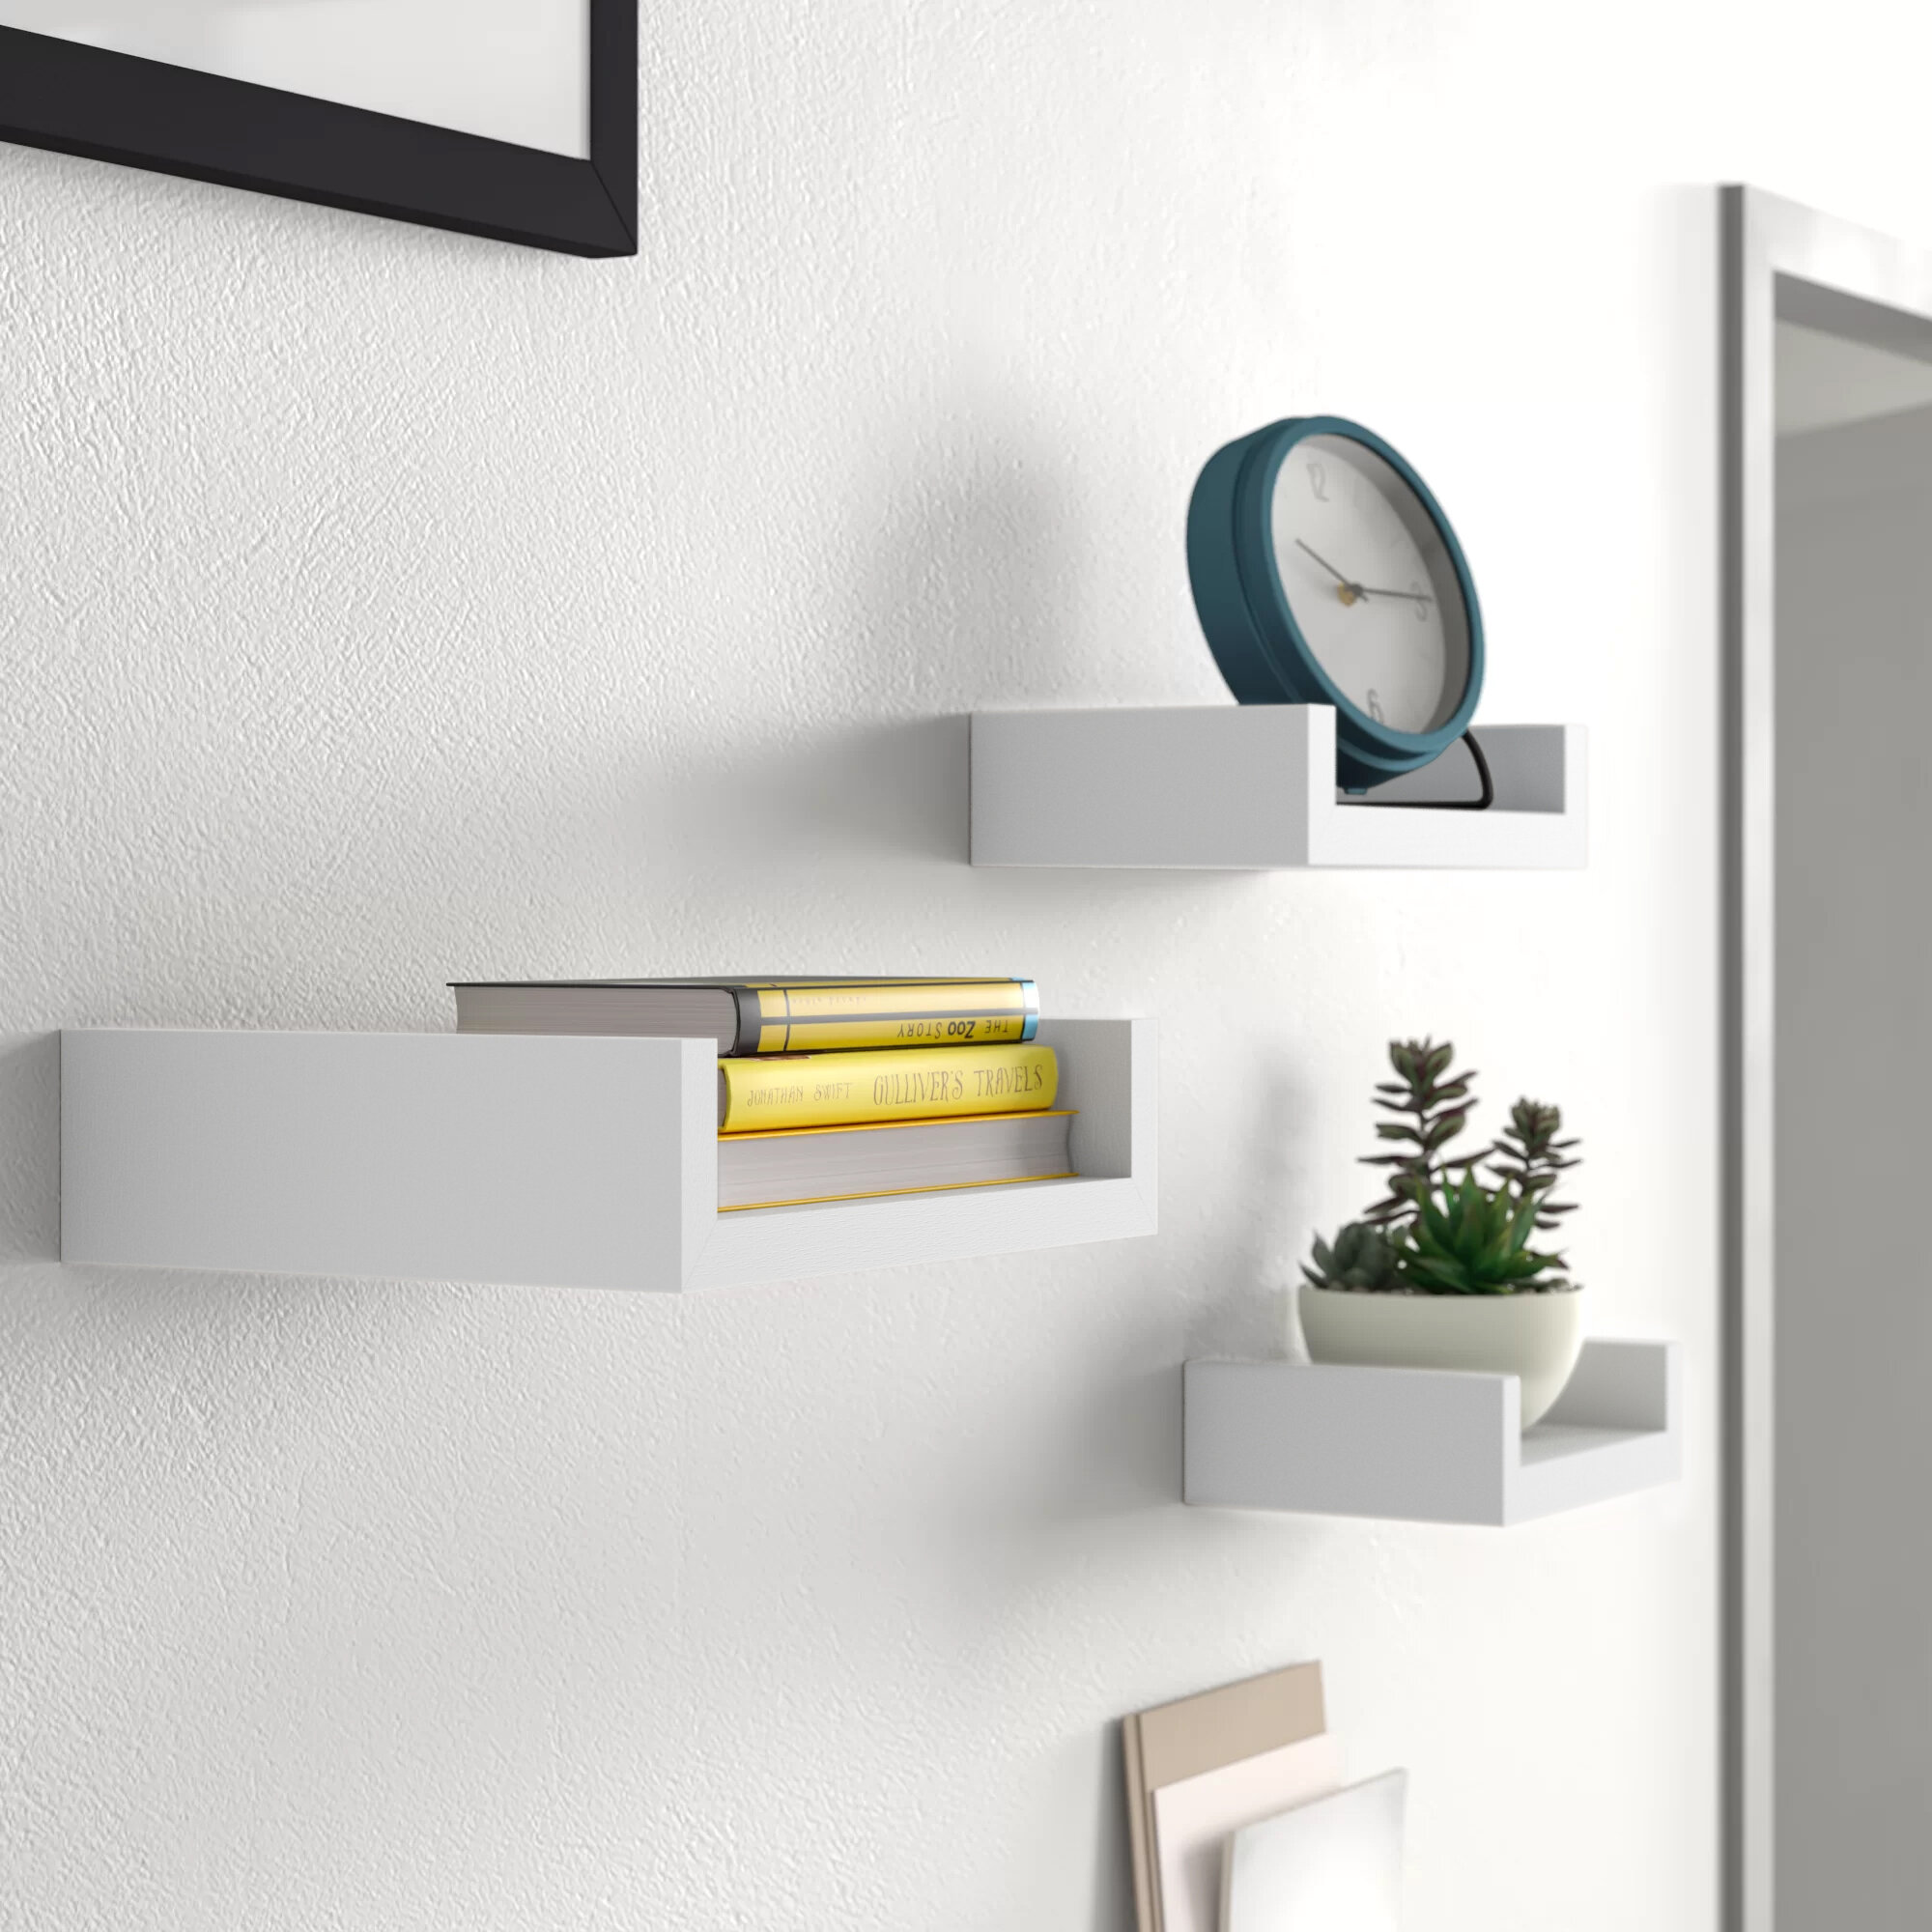 Decorative White Floating Wall Wood Shelves Shelf Display Home Decor Set of 4 